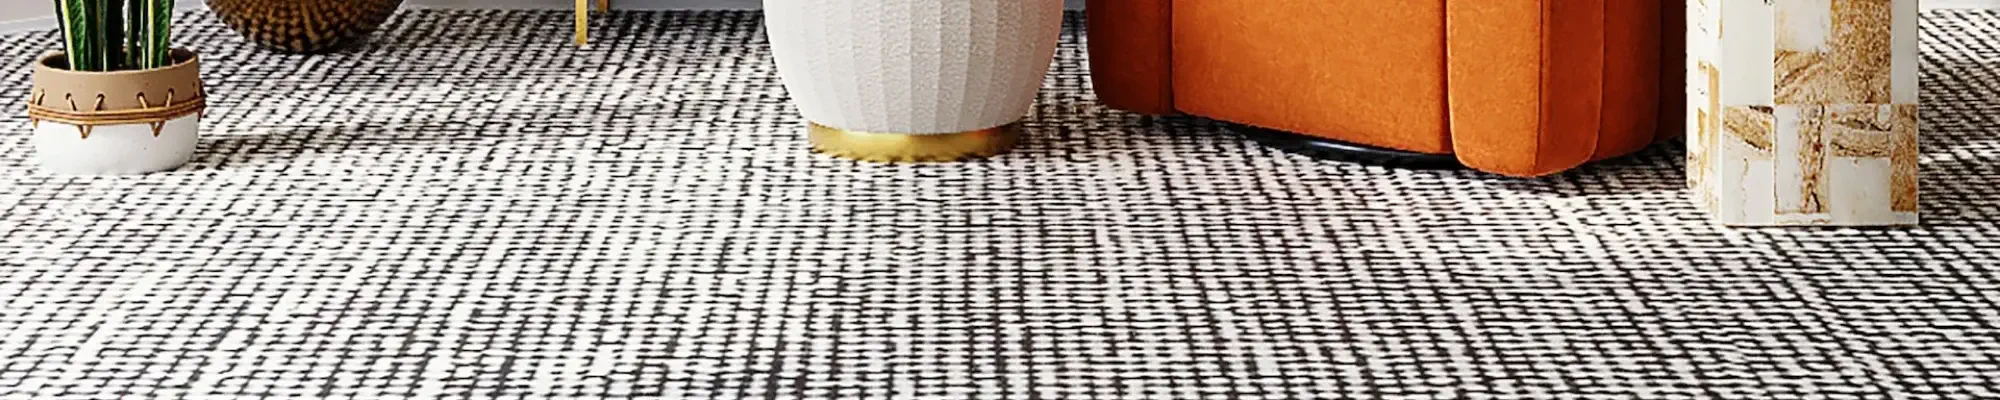 patterned carpet flooring | Stockdale Tile | Bakersfield, Visalia, and Tehachapi, CA